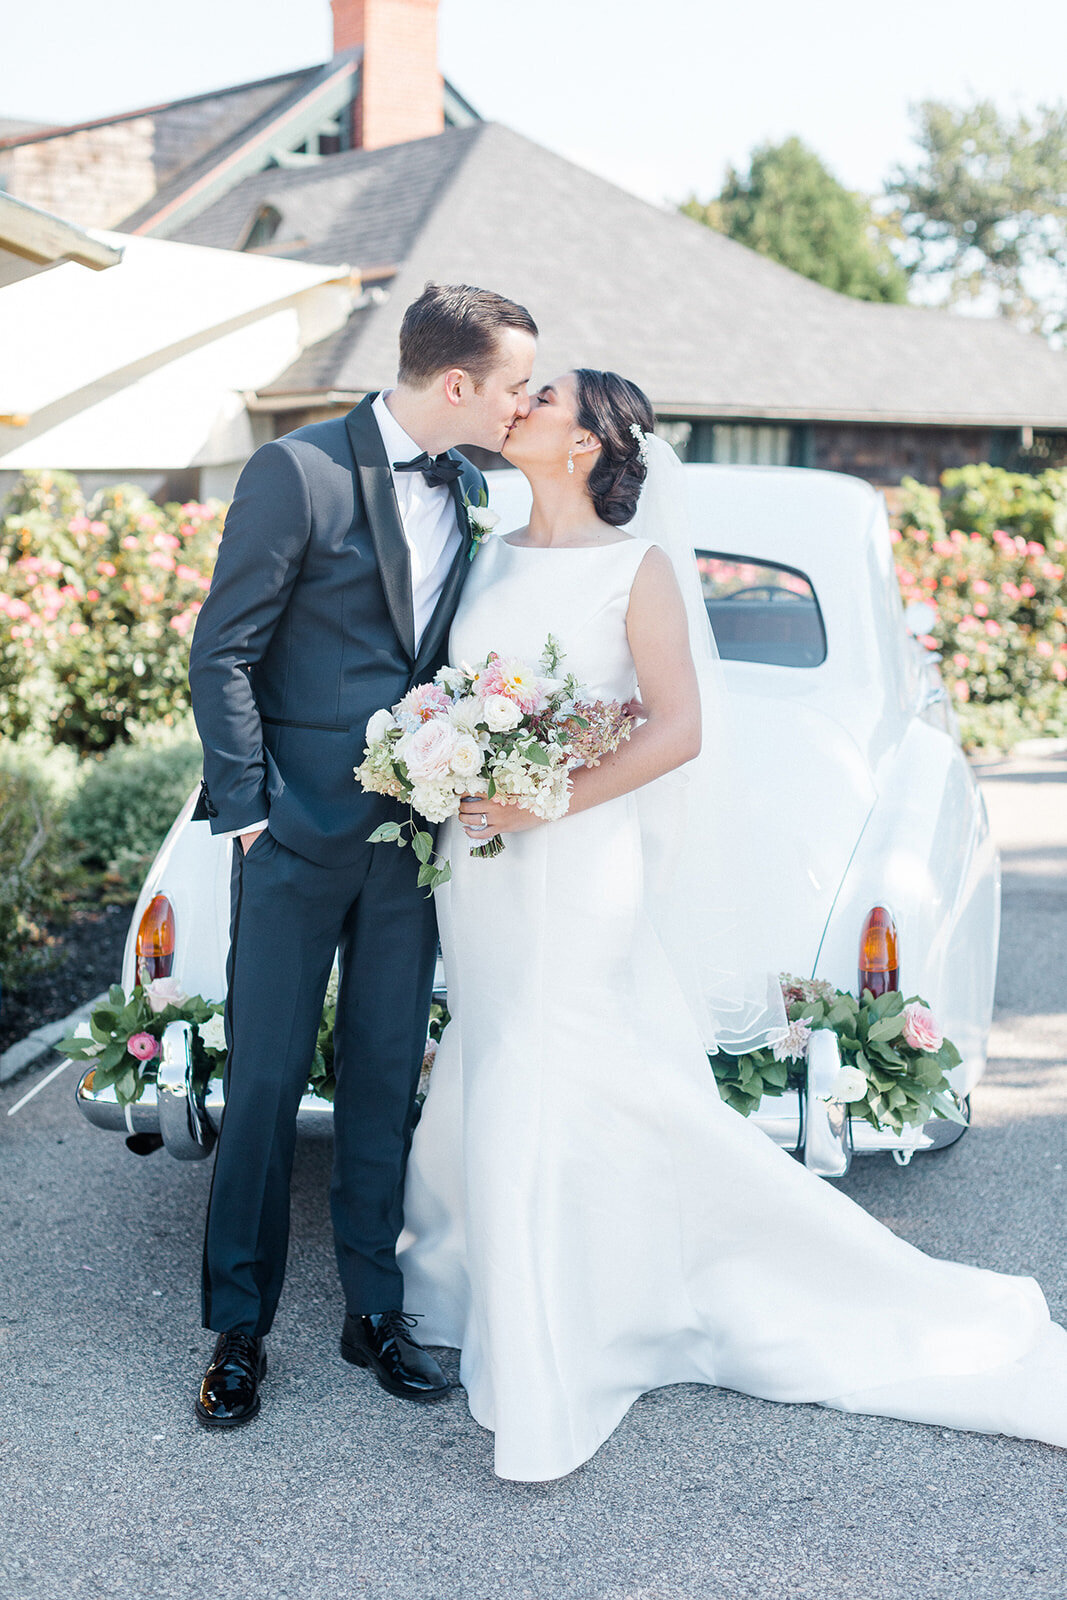 Kate-Murtaugh-Events-Newport-wedding-dahlia-bridal-bouquet-wedding-planner-vintage-car